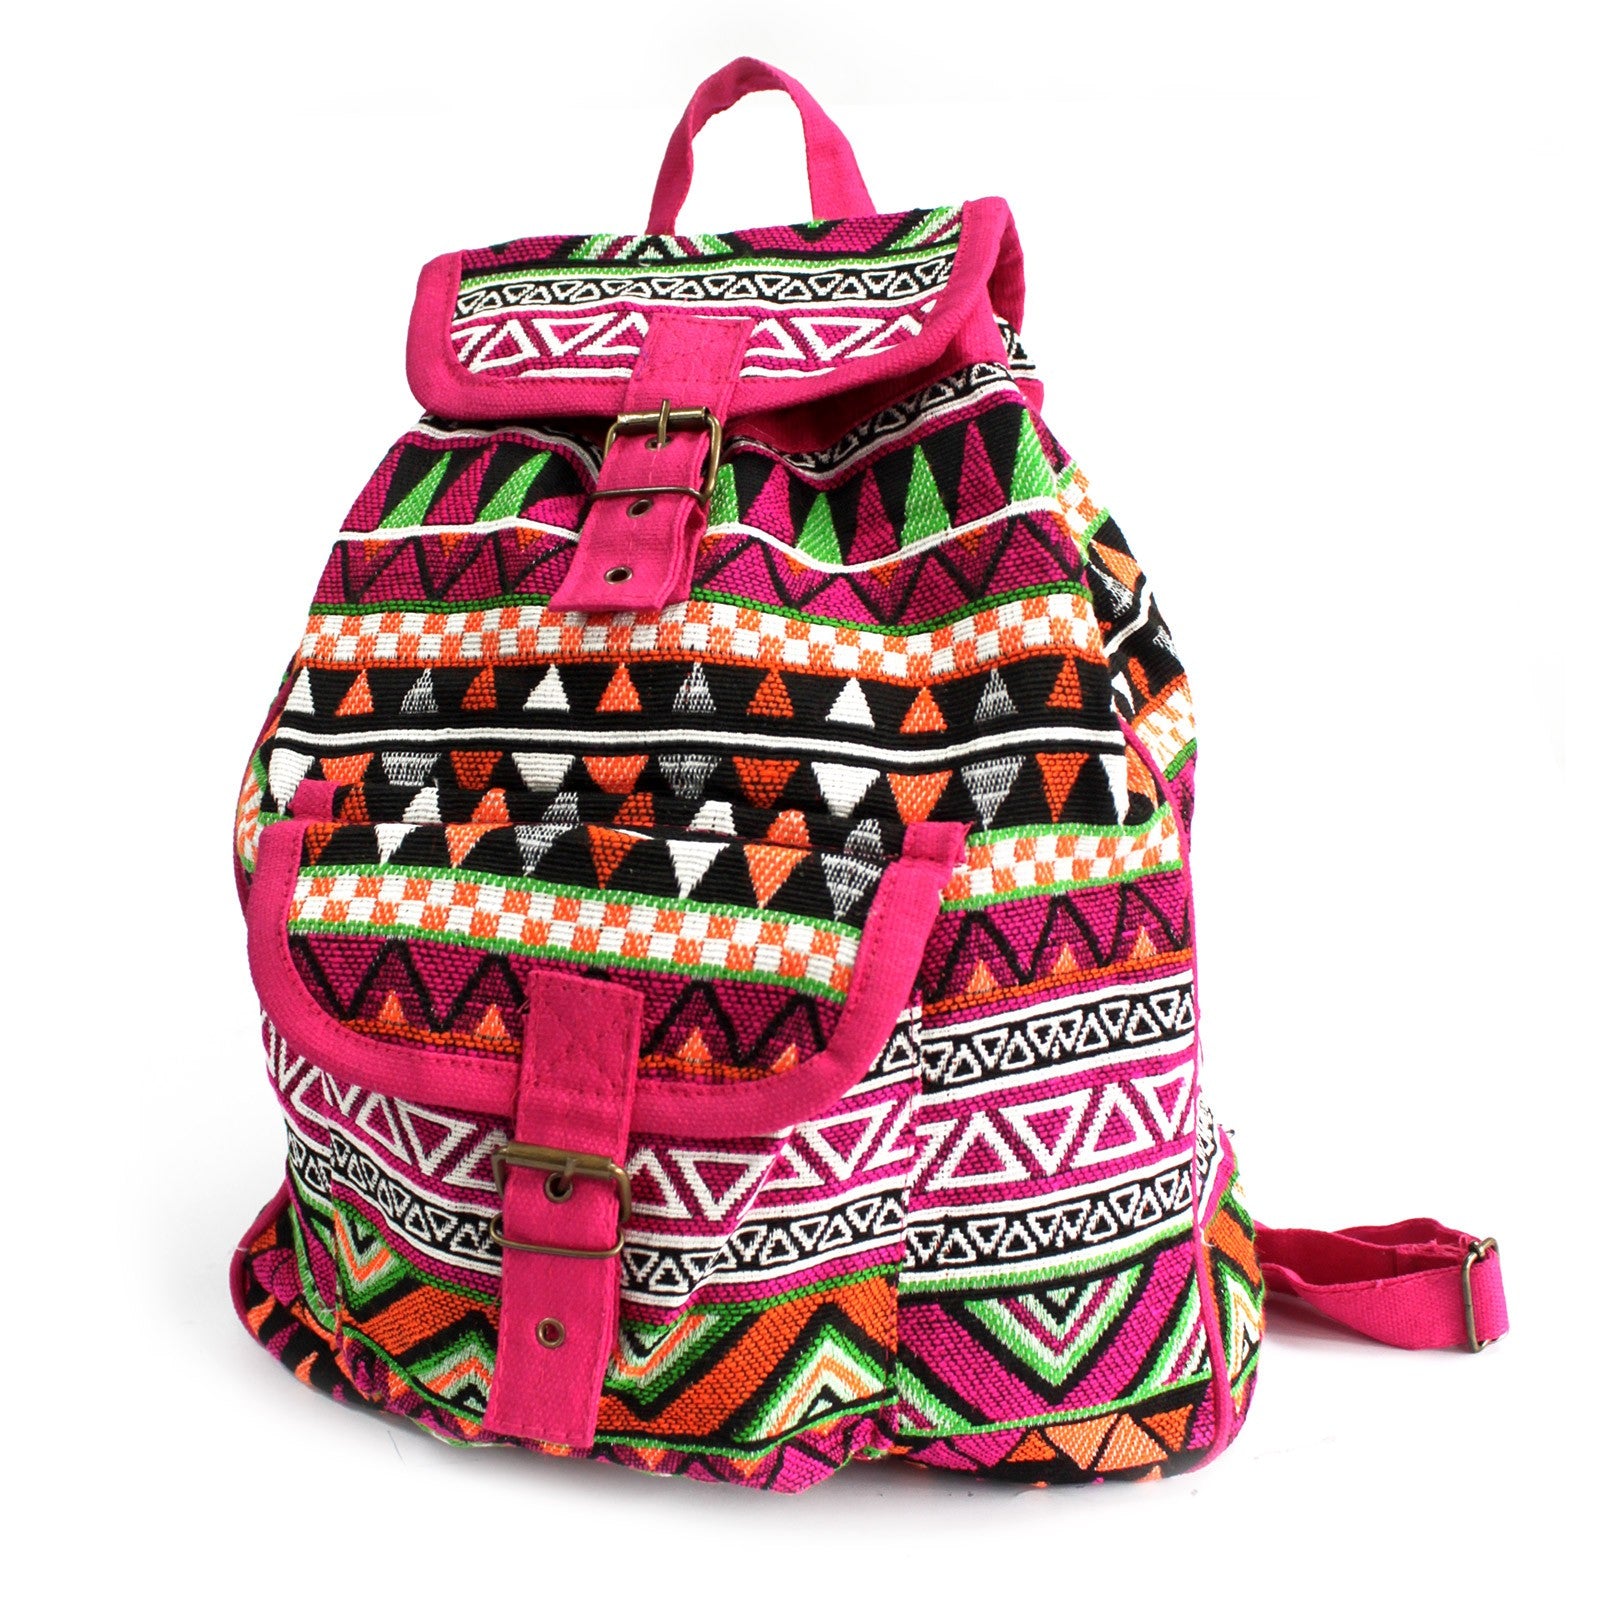 View Jacquard Bag Pink Backpack information